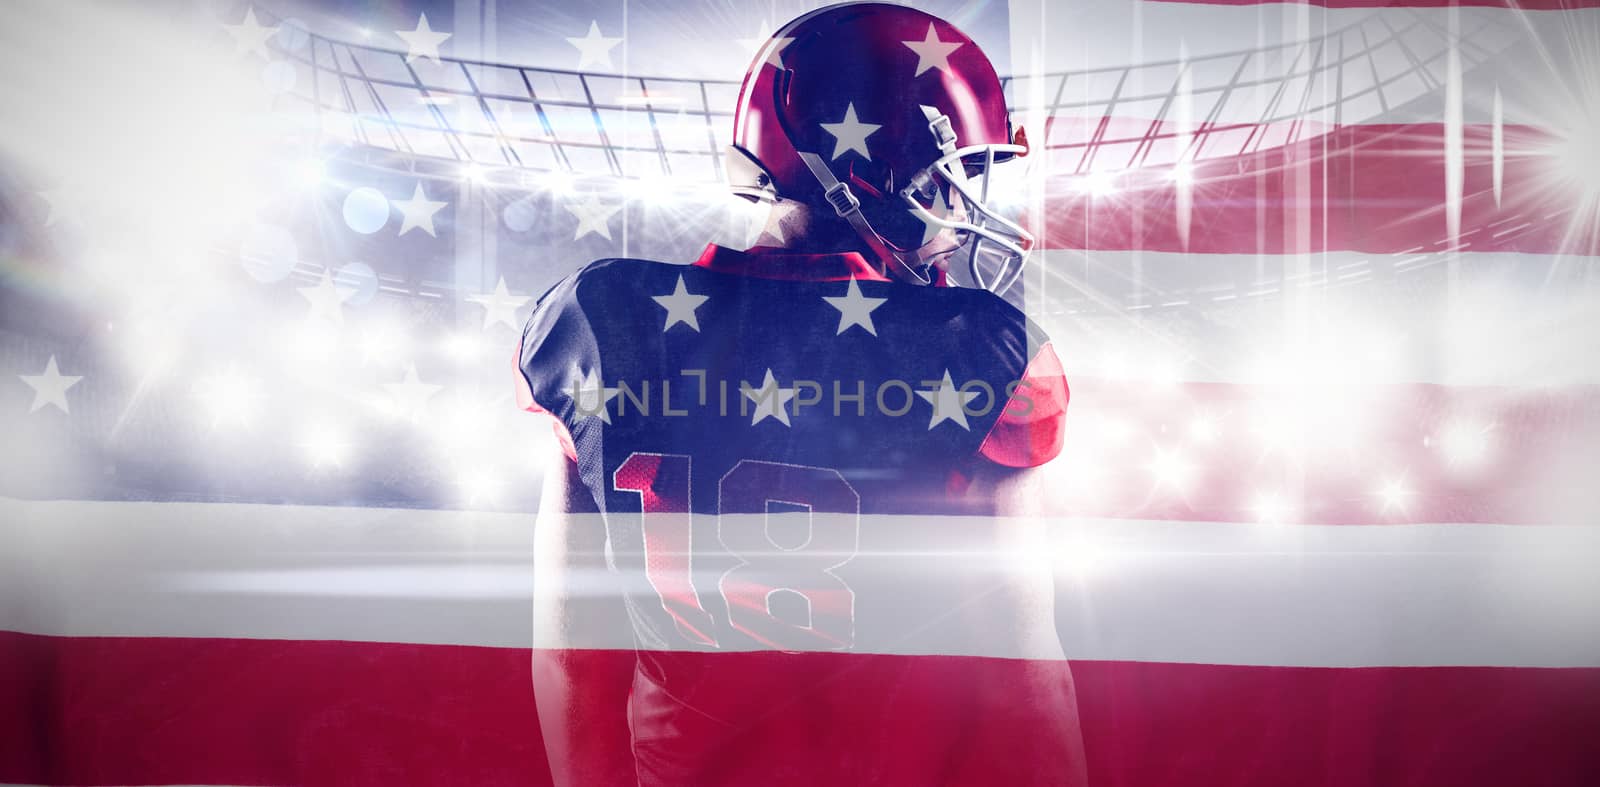 Composite image of american football player standing in rugby helmet by Wavebreakmedia